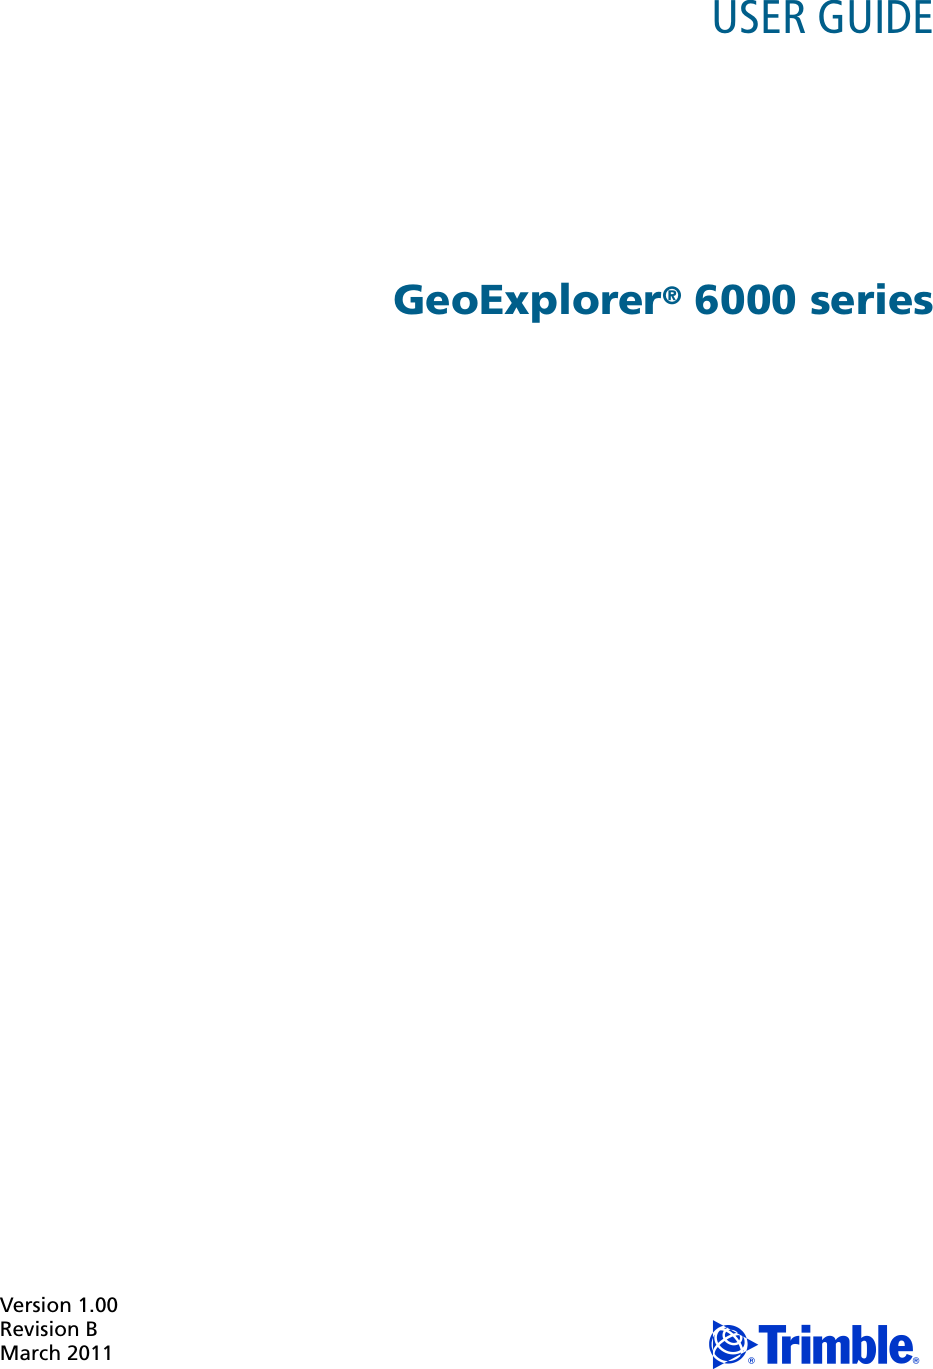 Version 1.00Revision BMarch 2011 FUSER GUIDE GeoExplorer® 6000 series